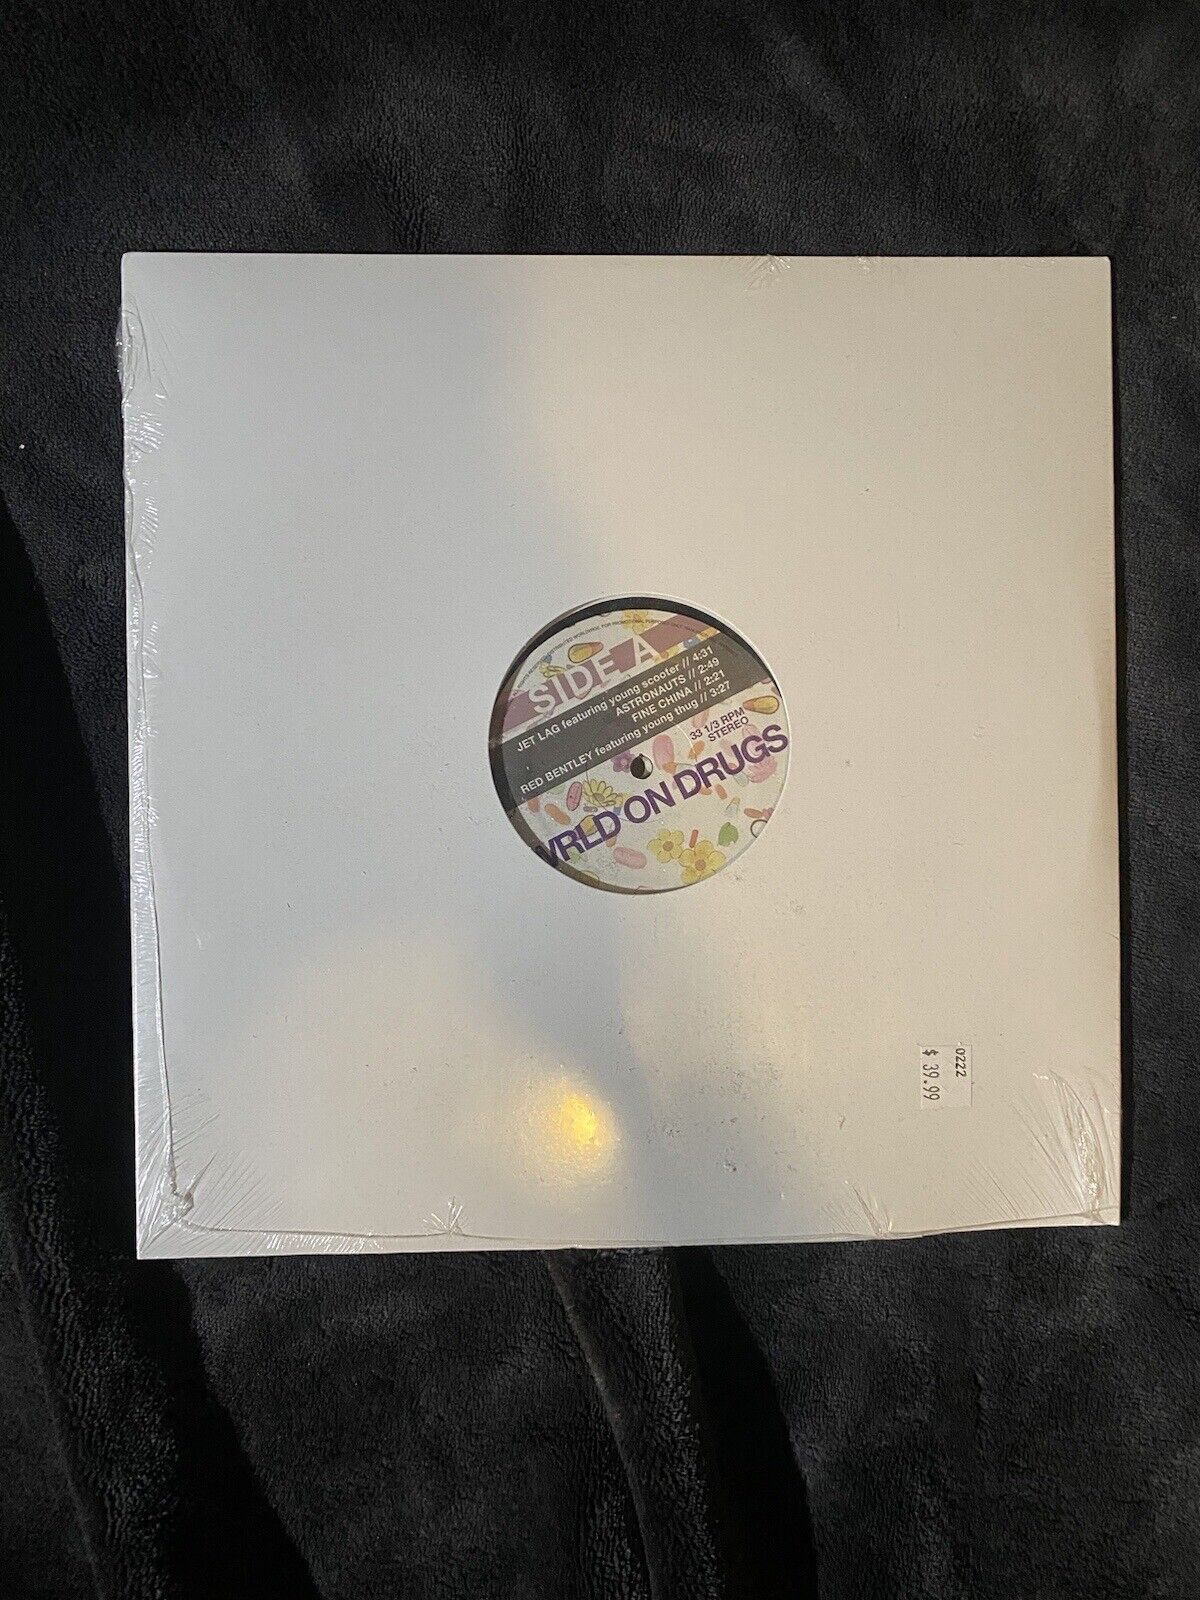 Wrld On Drugs Vinyl Promotional EXTREMELY Rare Juice Wrld 999 Club LAST ONE